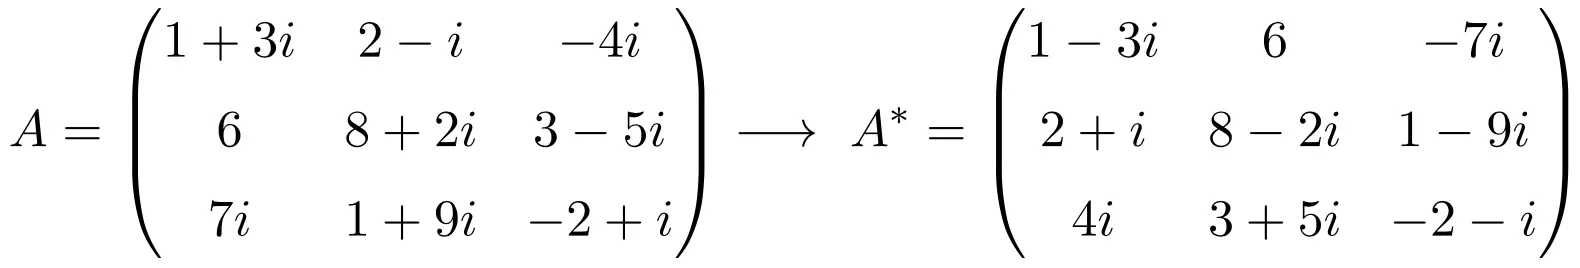 matrice transposée conjuguée de dimension 3x3